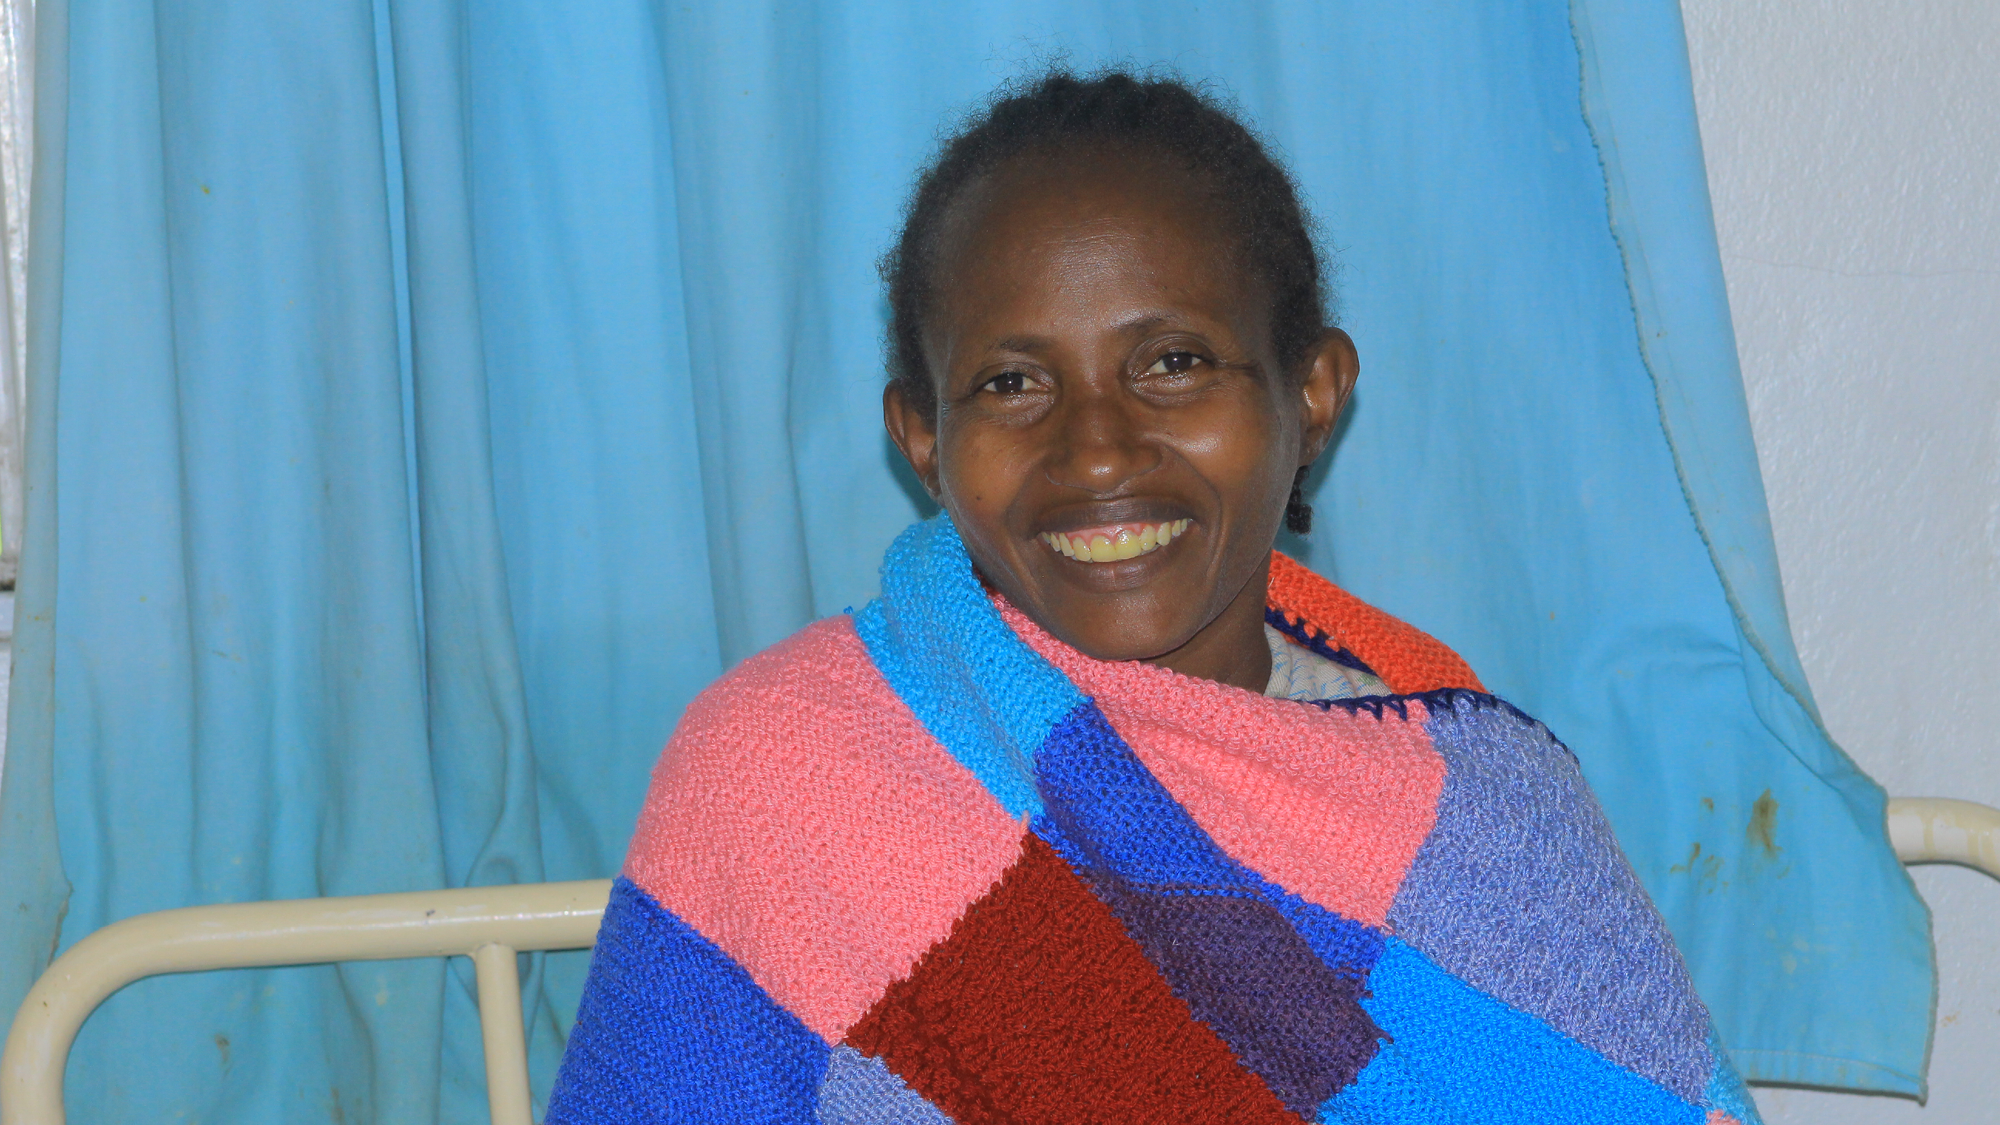 Genet patient2 edited | Catherine Hamlin Fistula Foundation | Together we can eradicate obstetric fistula in Ethiopia.